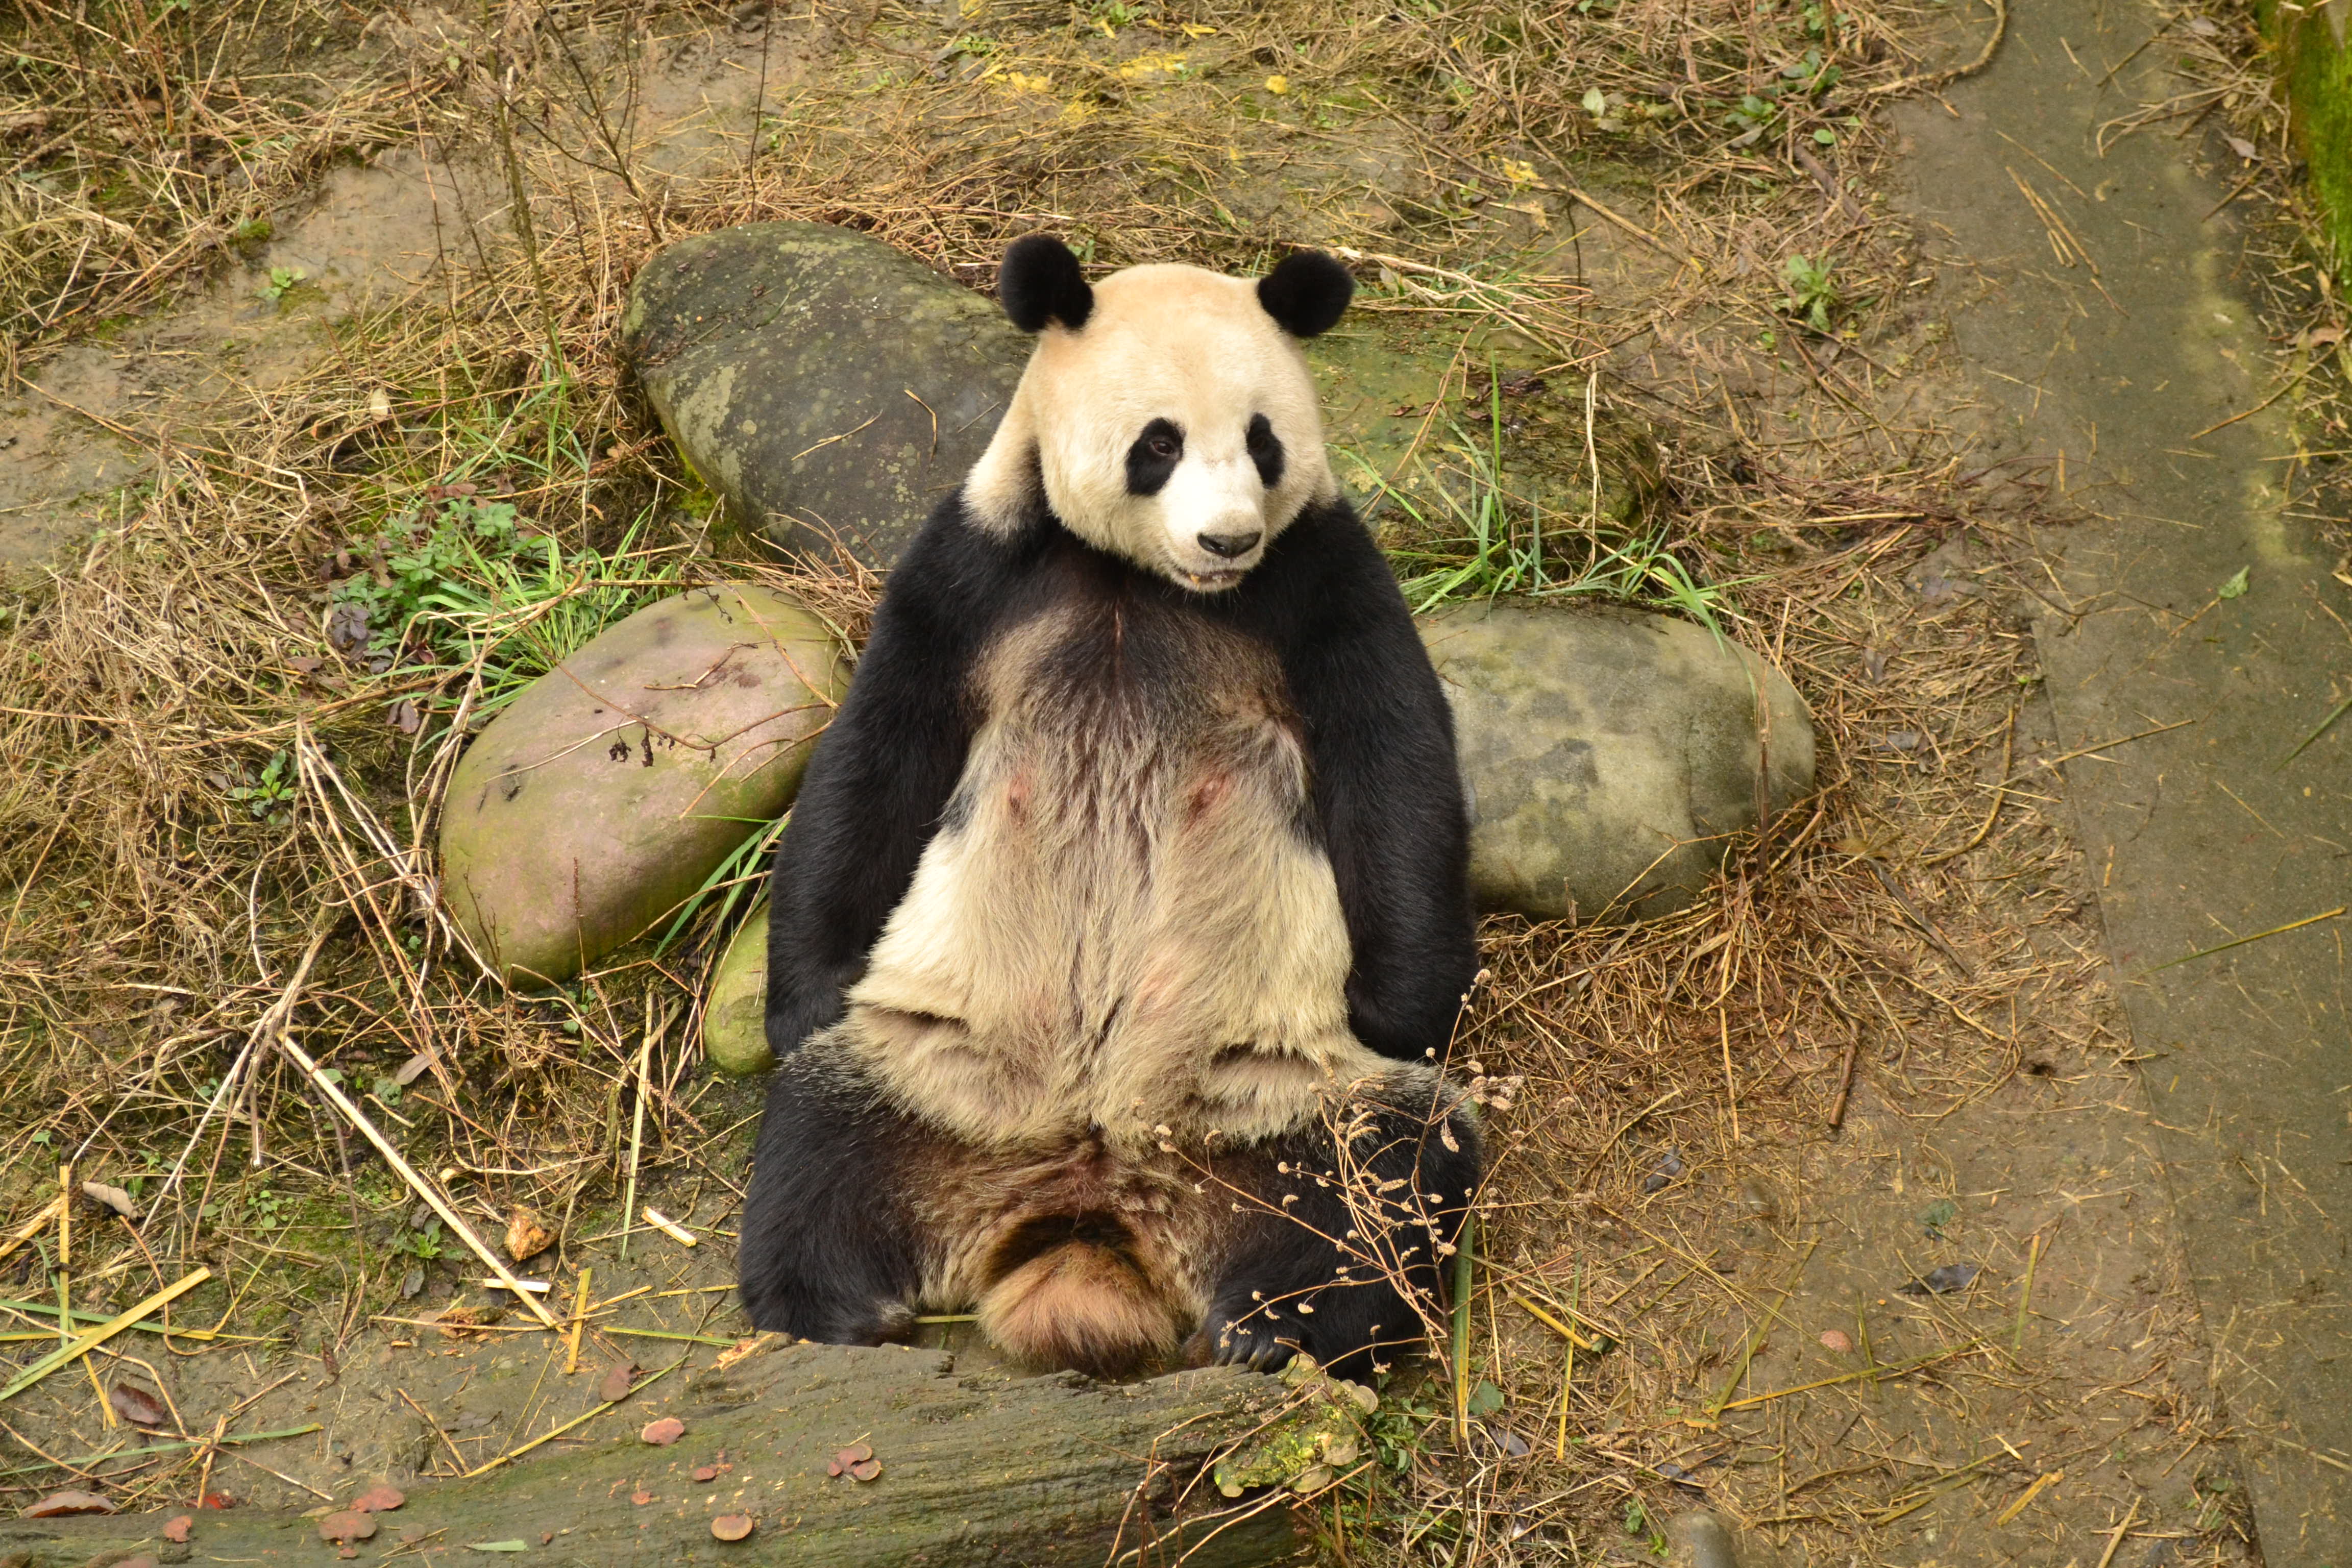 Giant panda publication in Biological Conservation